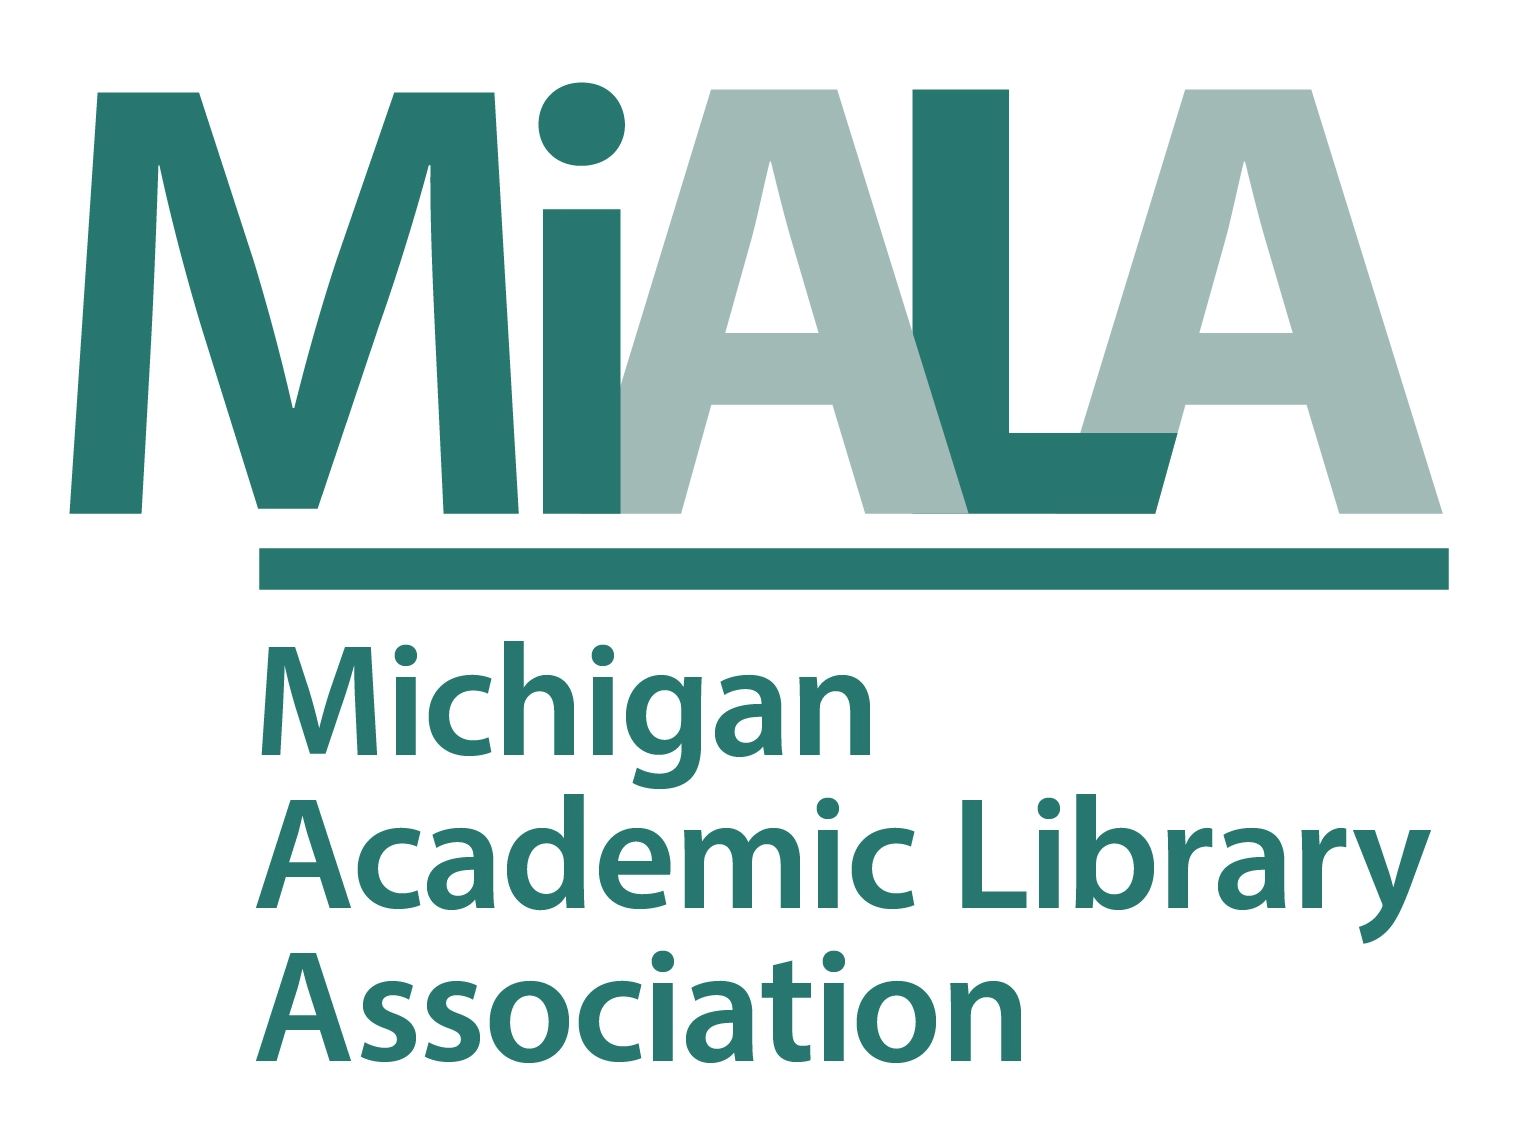 Michigan Academic Library Association